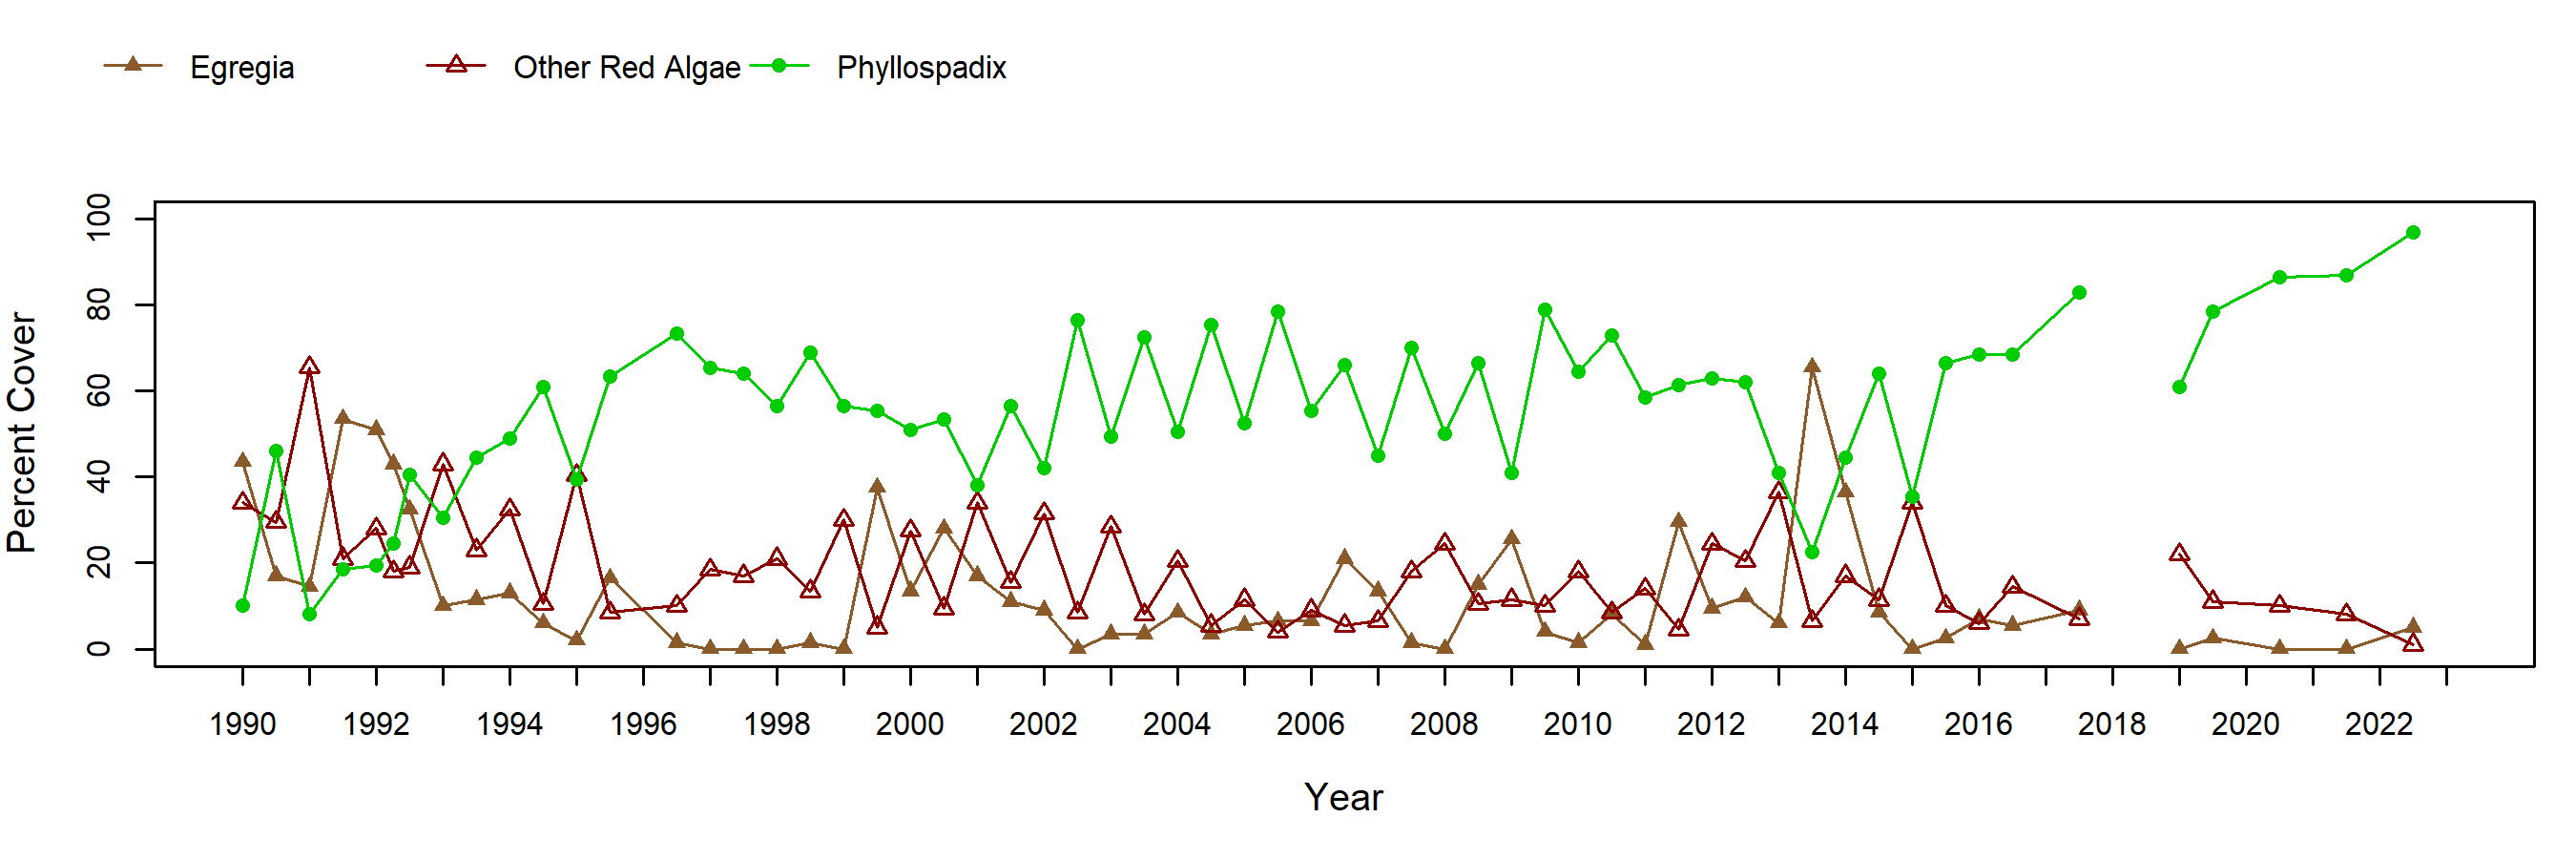 Cabrillo I Egregia trend plot